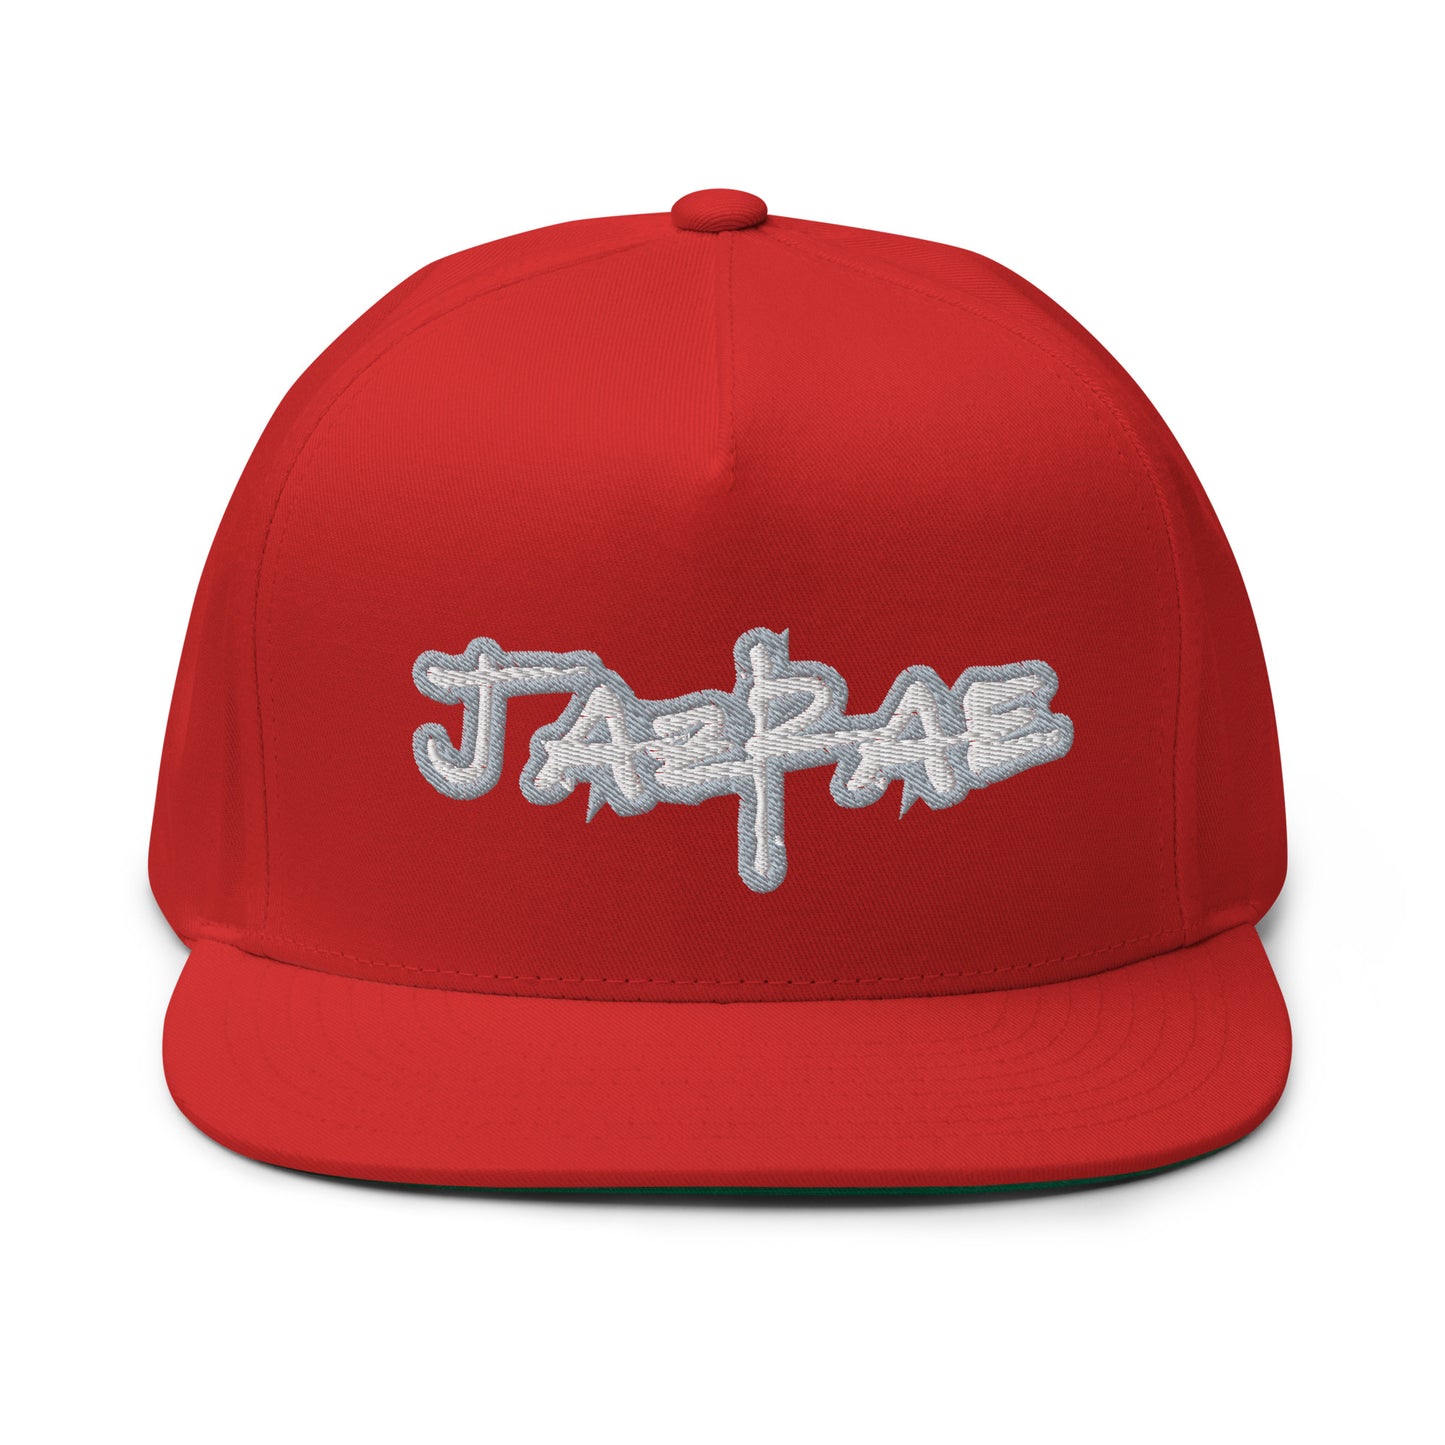 JAZRAE SNAPBACK Cap